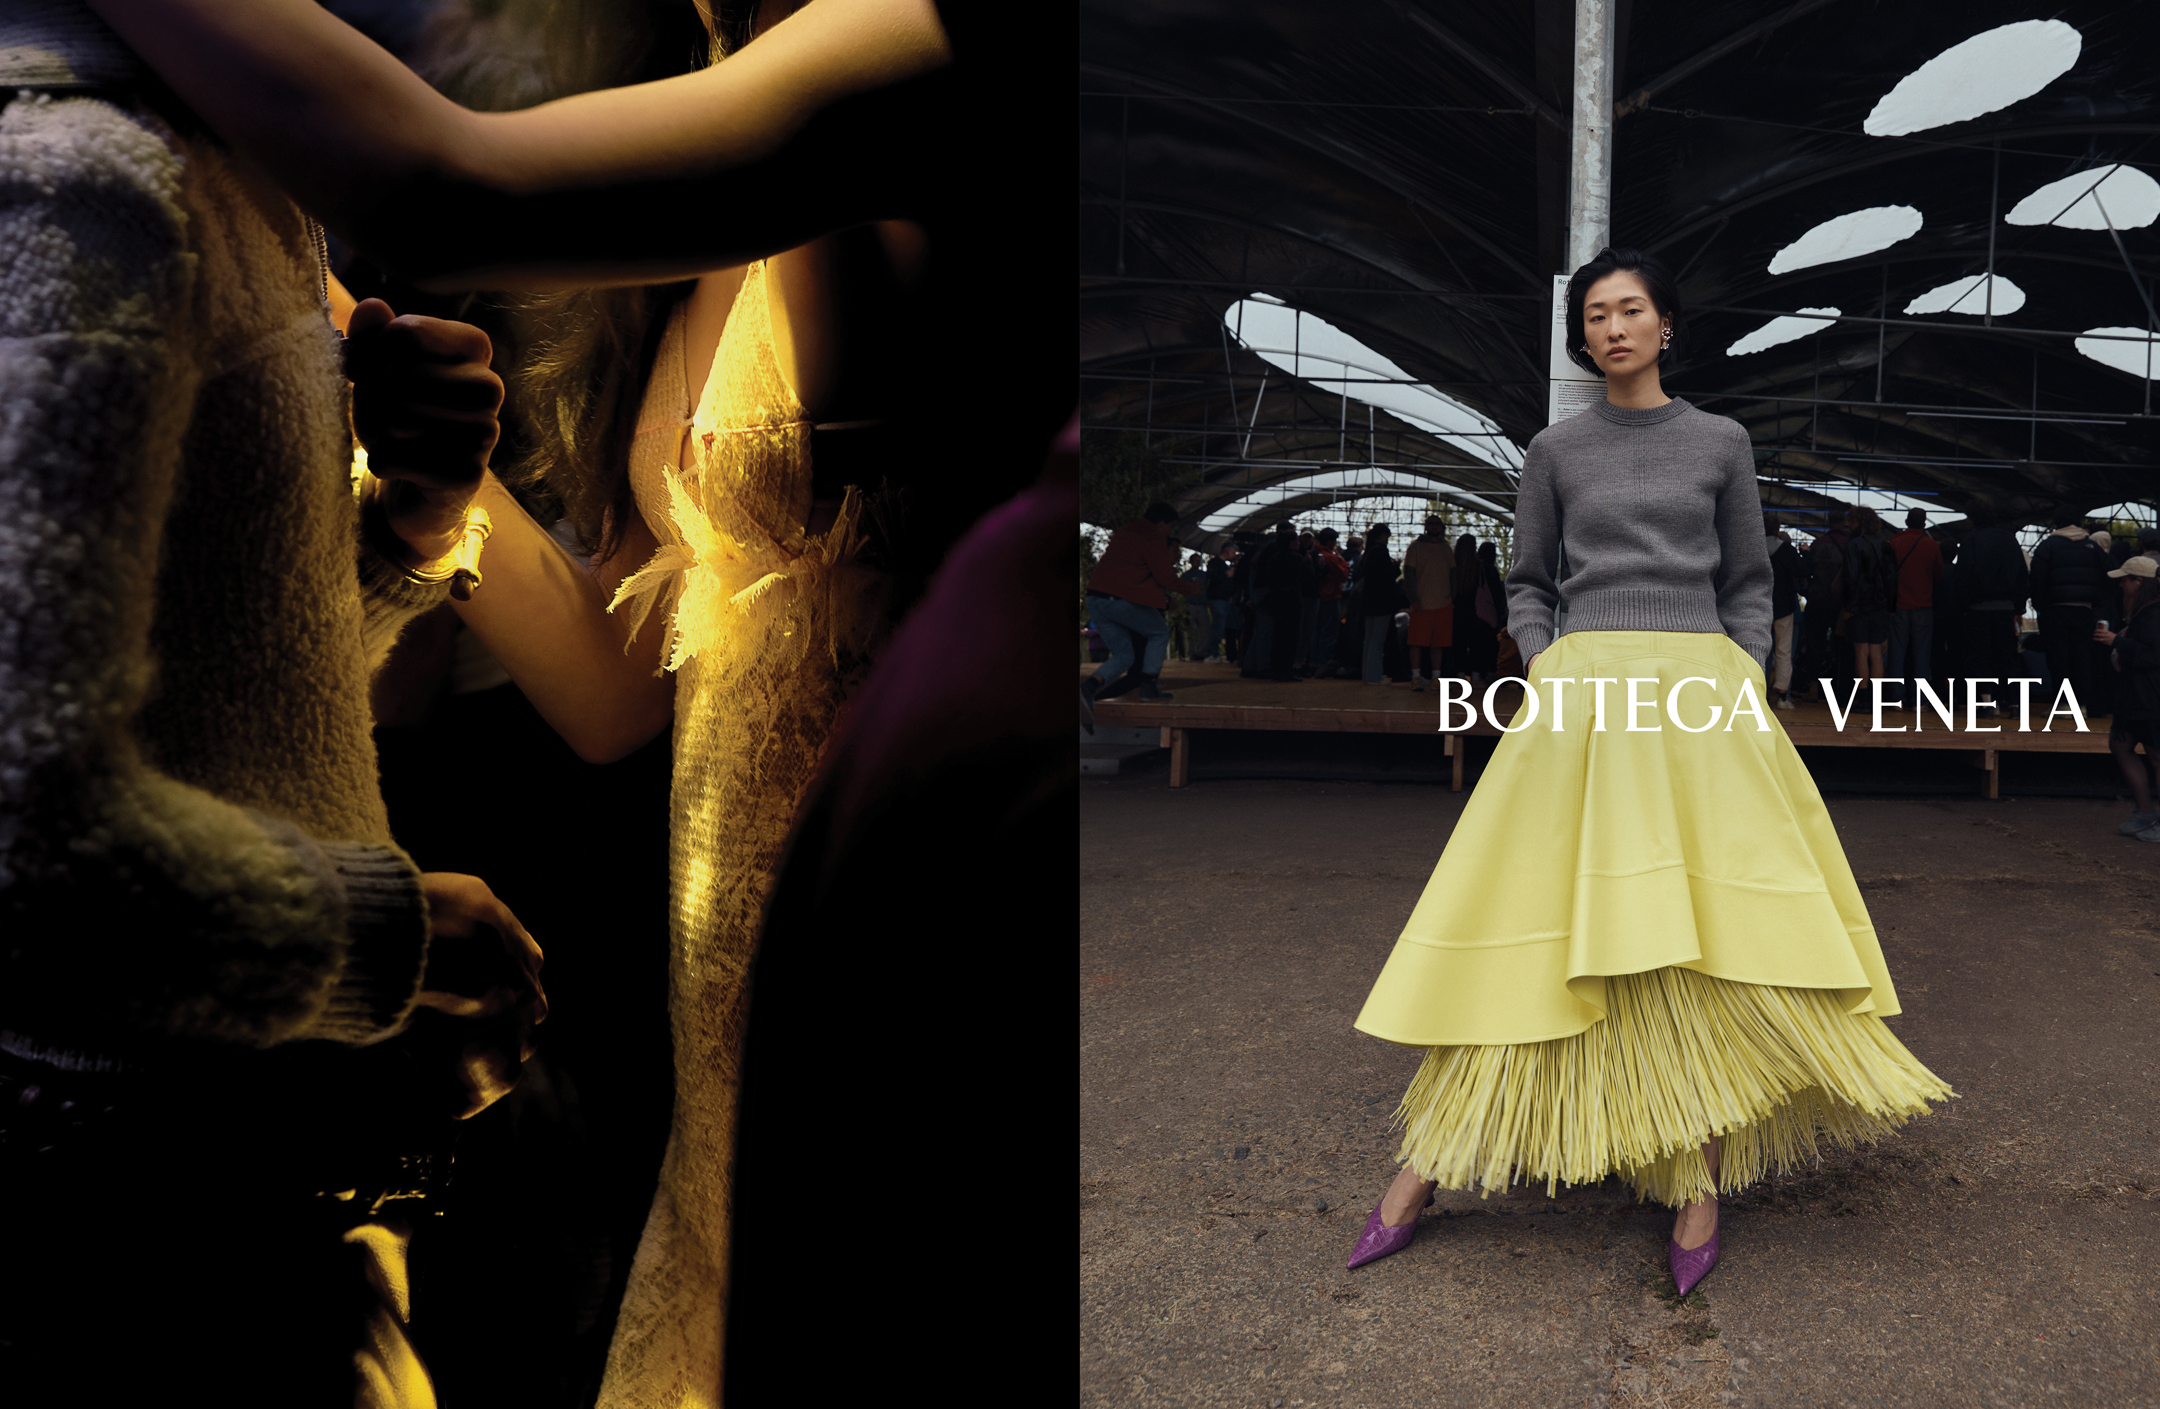 Matthieu Blazy's Runway Debut for Bottega Veneta - PurseBlog